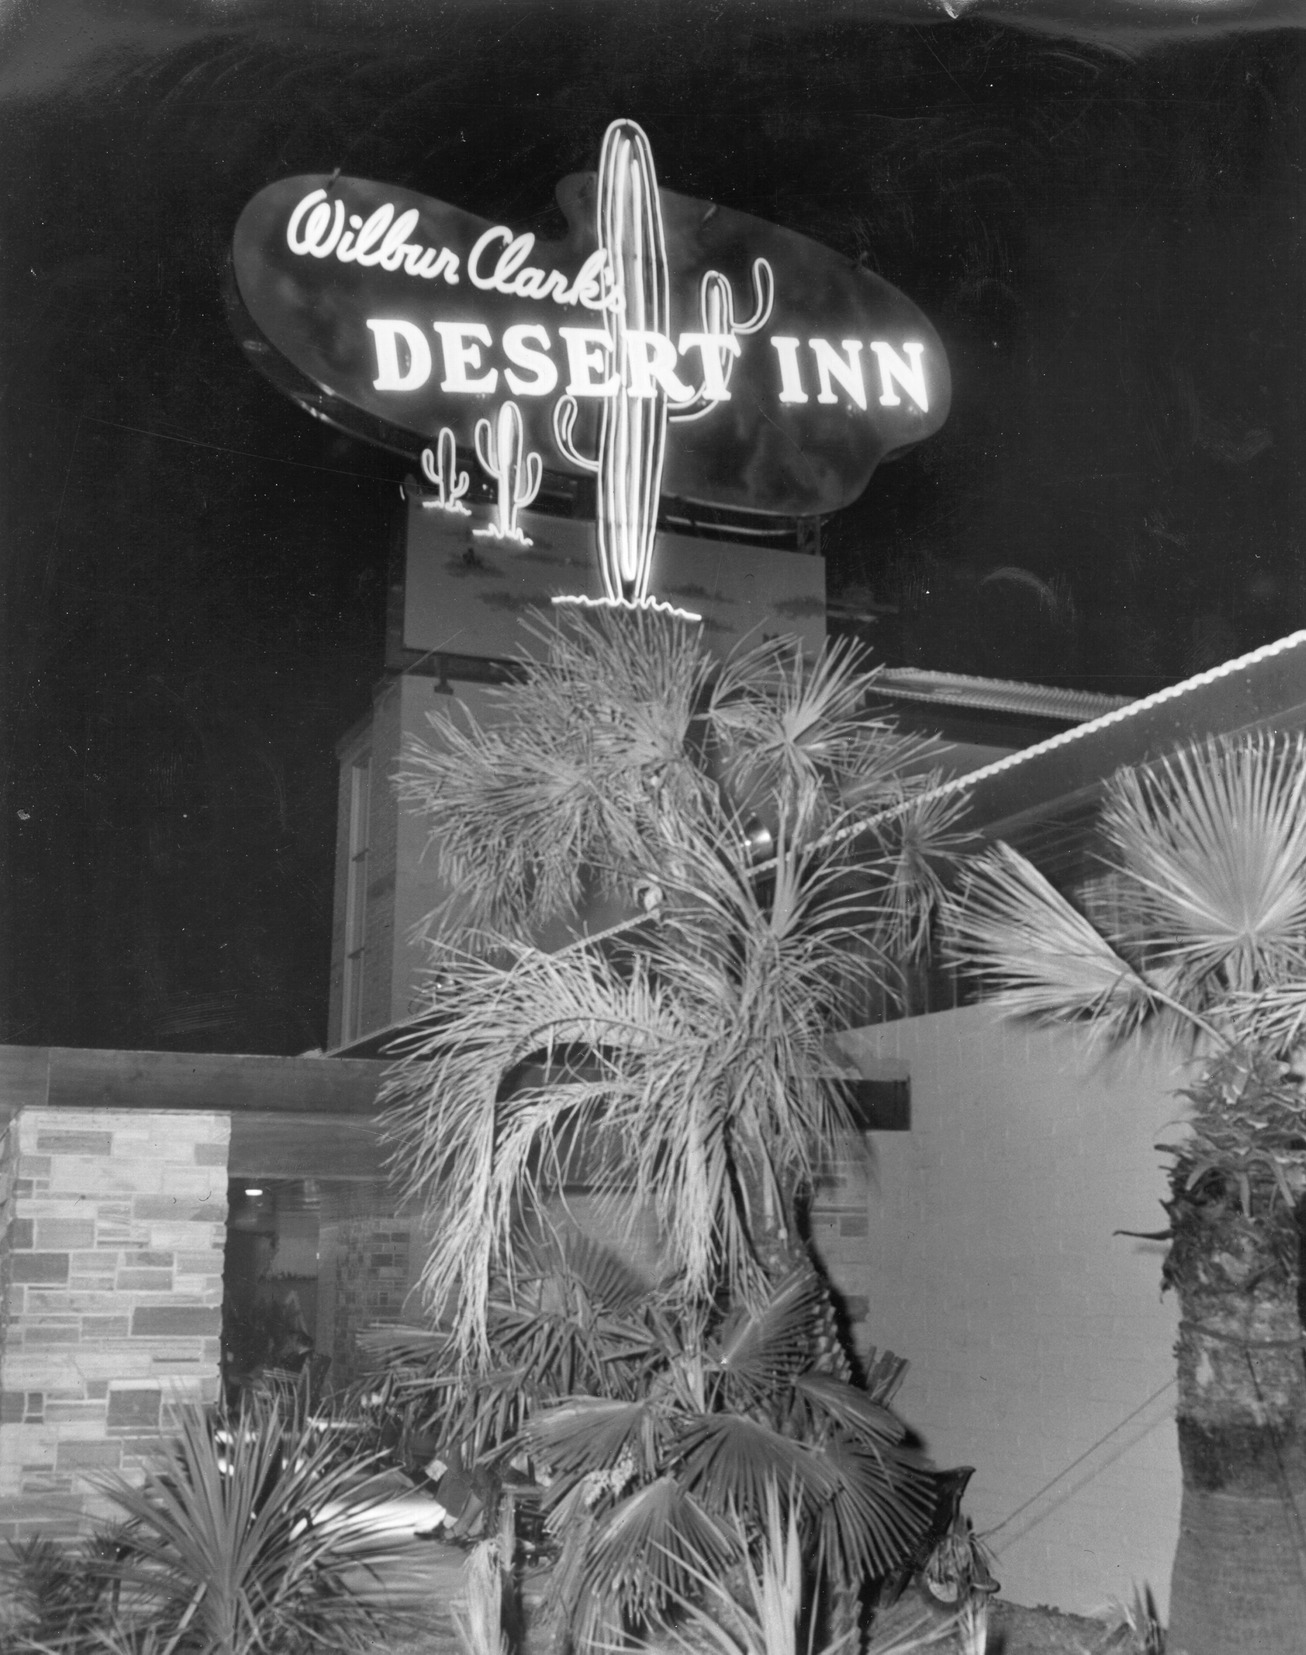 Photograph of the neon sign in front of Wilbur Clark's Desert Inn (Las Vegas), circa 1950s